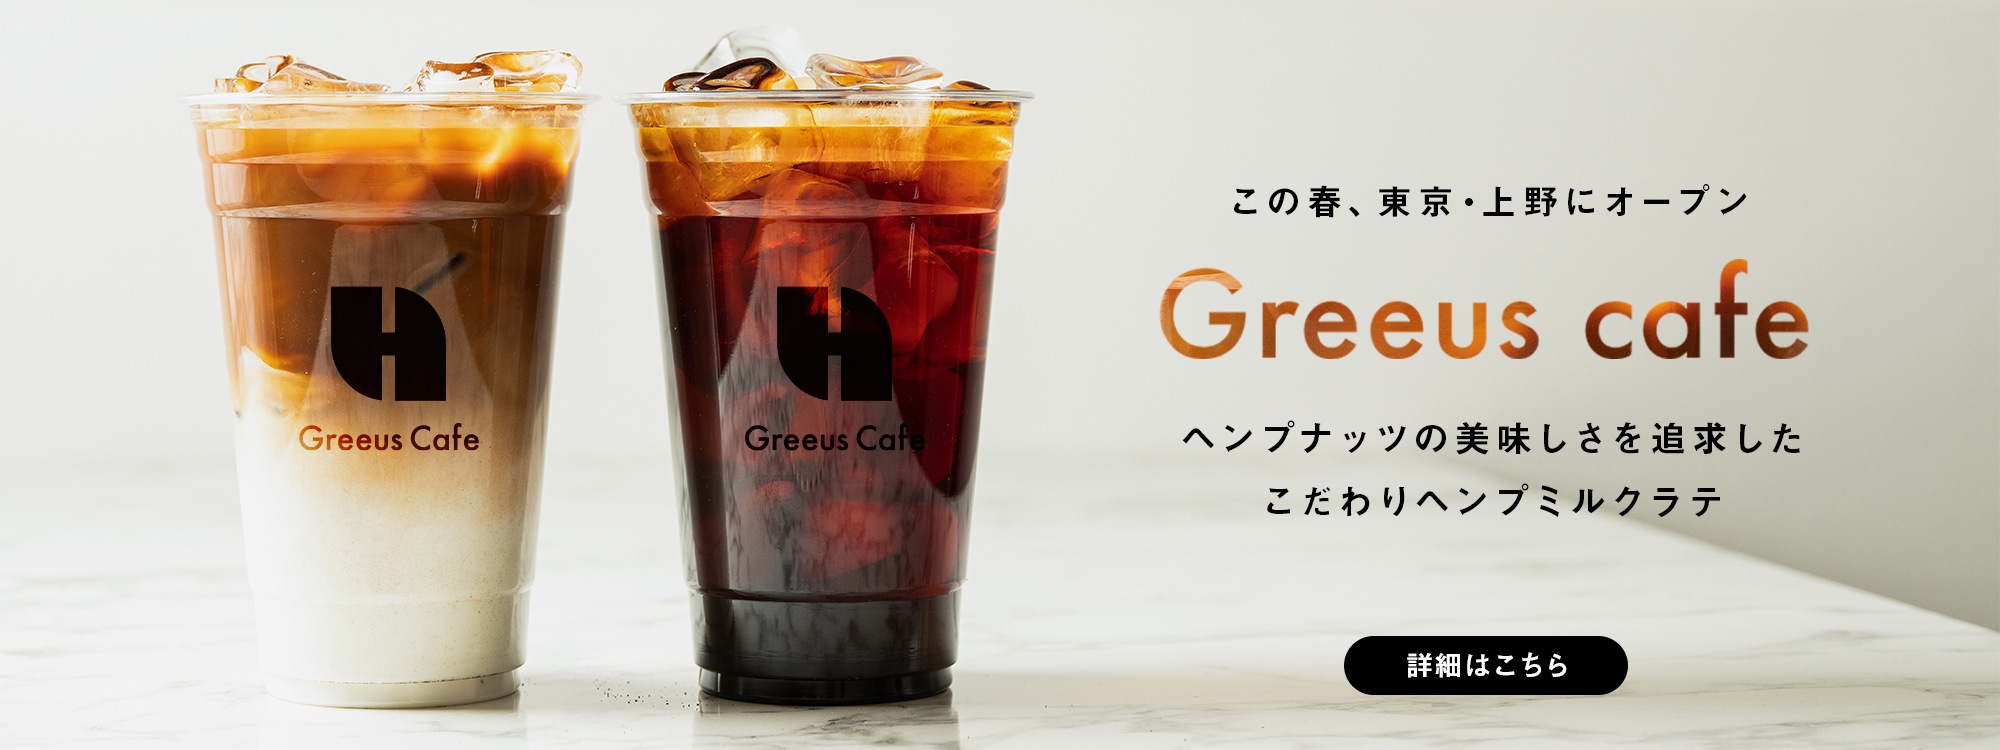 greeuscafe